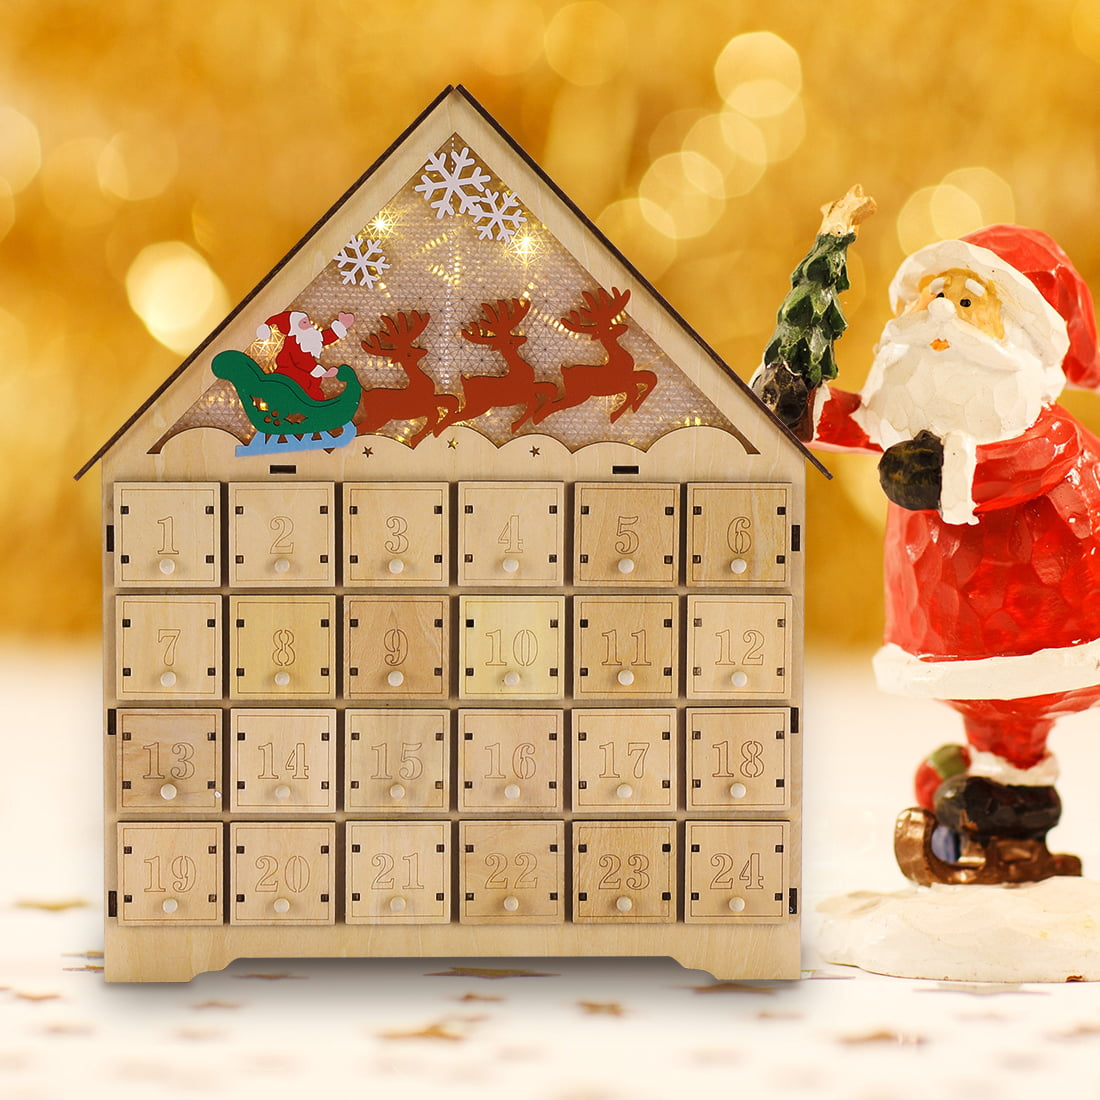 Wooden LED Lighted Santa Sleigh Reindeer Snowflakes Christmas Countdown